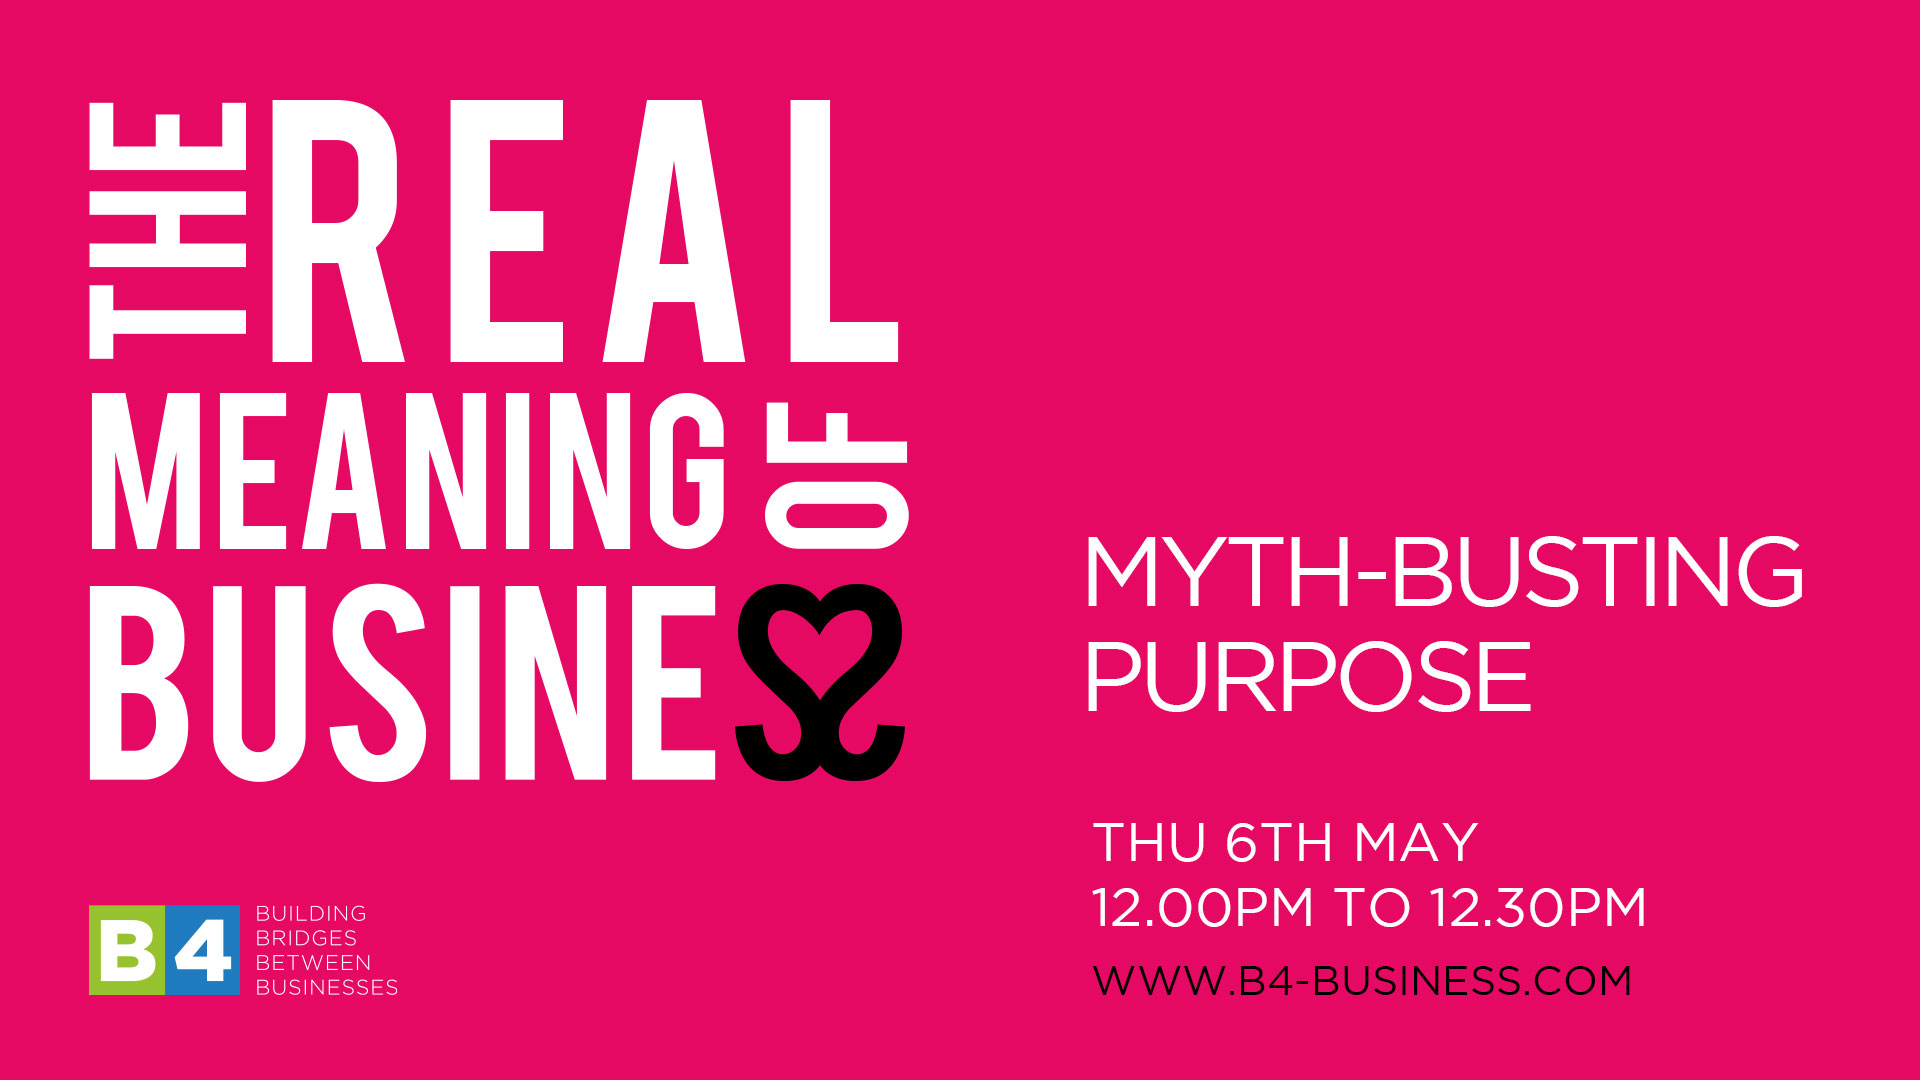 Myth-Busting Purpose – B4